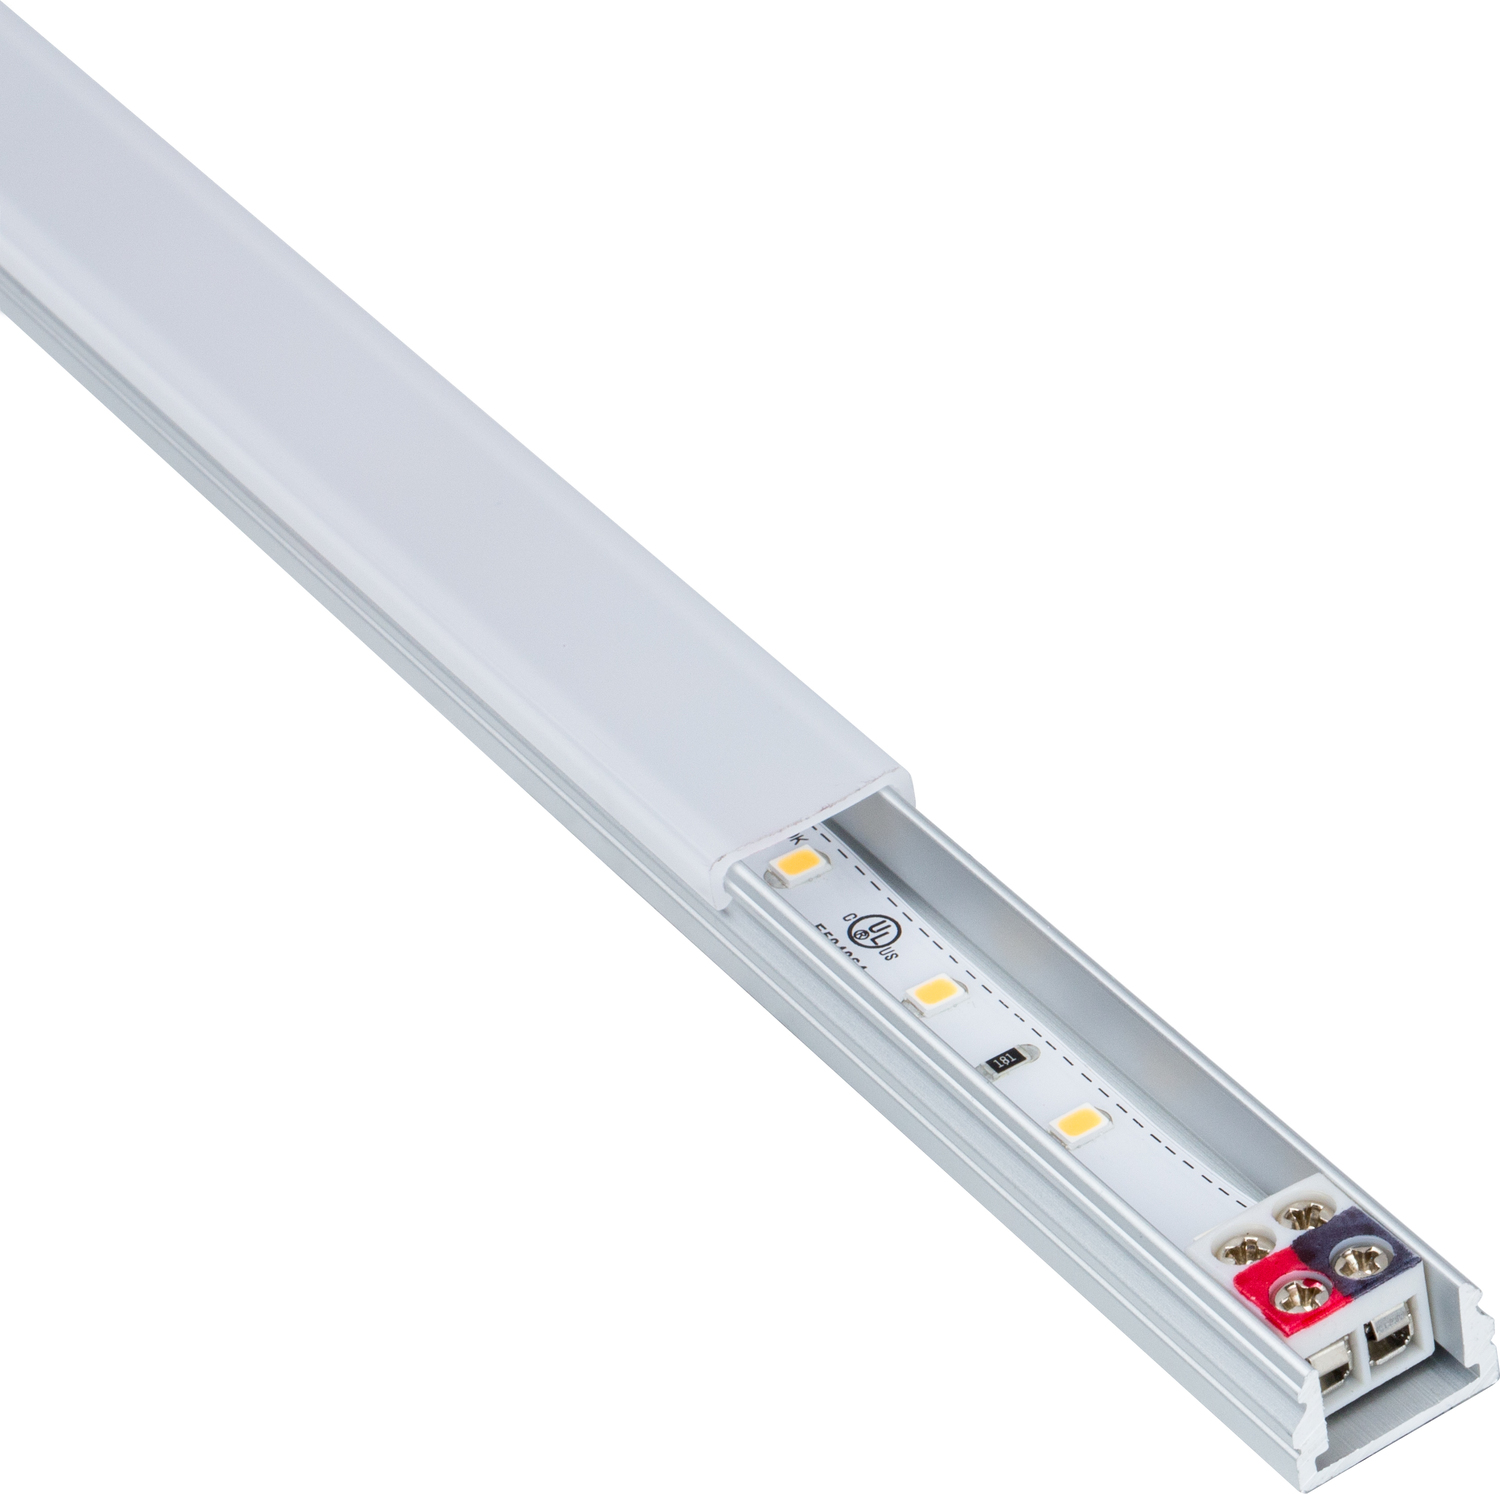 strip lights for under kitchen units Task Lighting Linear Fixtures;Single-white Lighting Aluminum